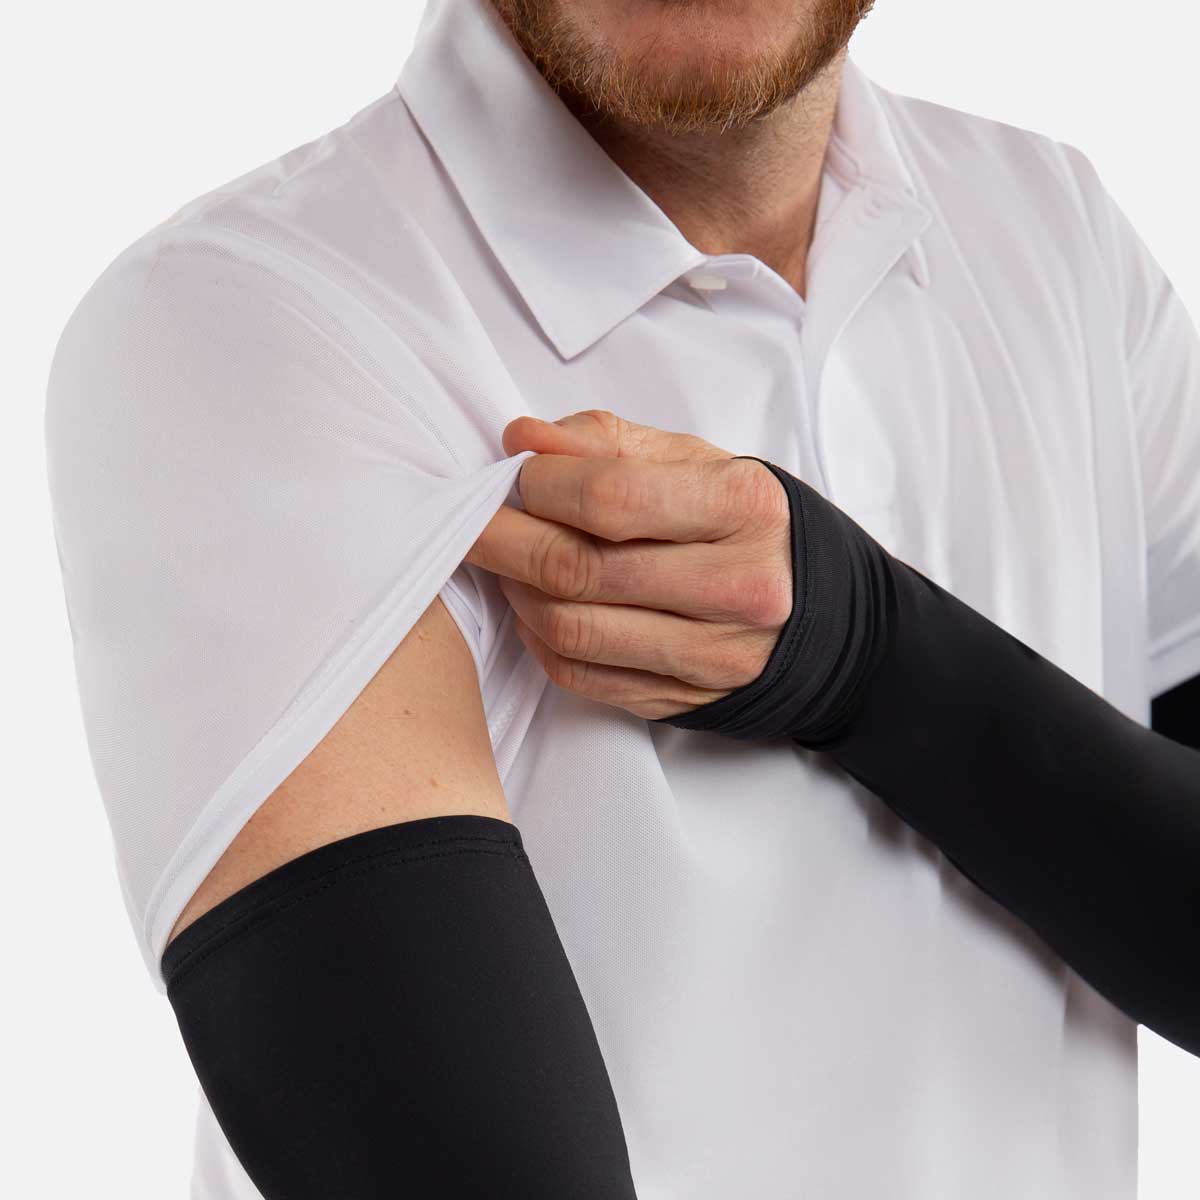 Black Arm Sleeves – Men - Sun Protection UPF 50+ Arm Sleeves